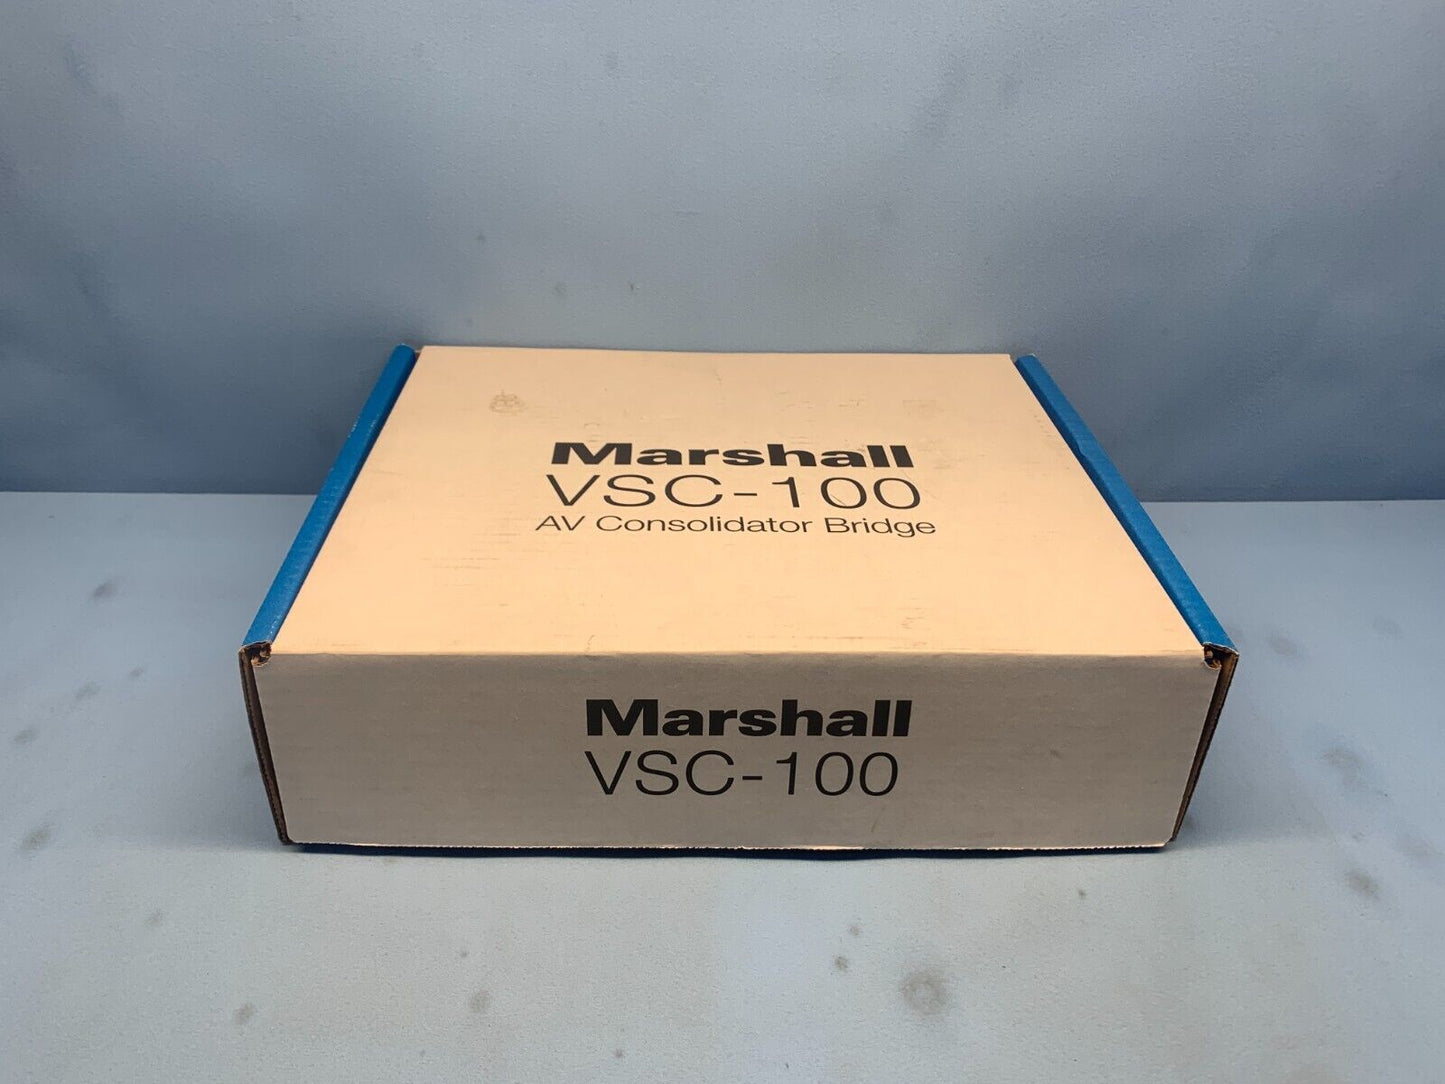 Marshall VSC-100 AV Consolidator Bridge with Dual HDMI and USB Pass-Through